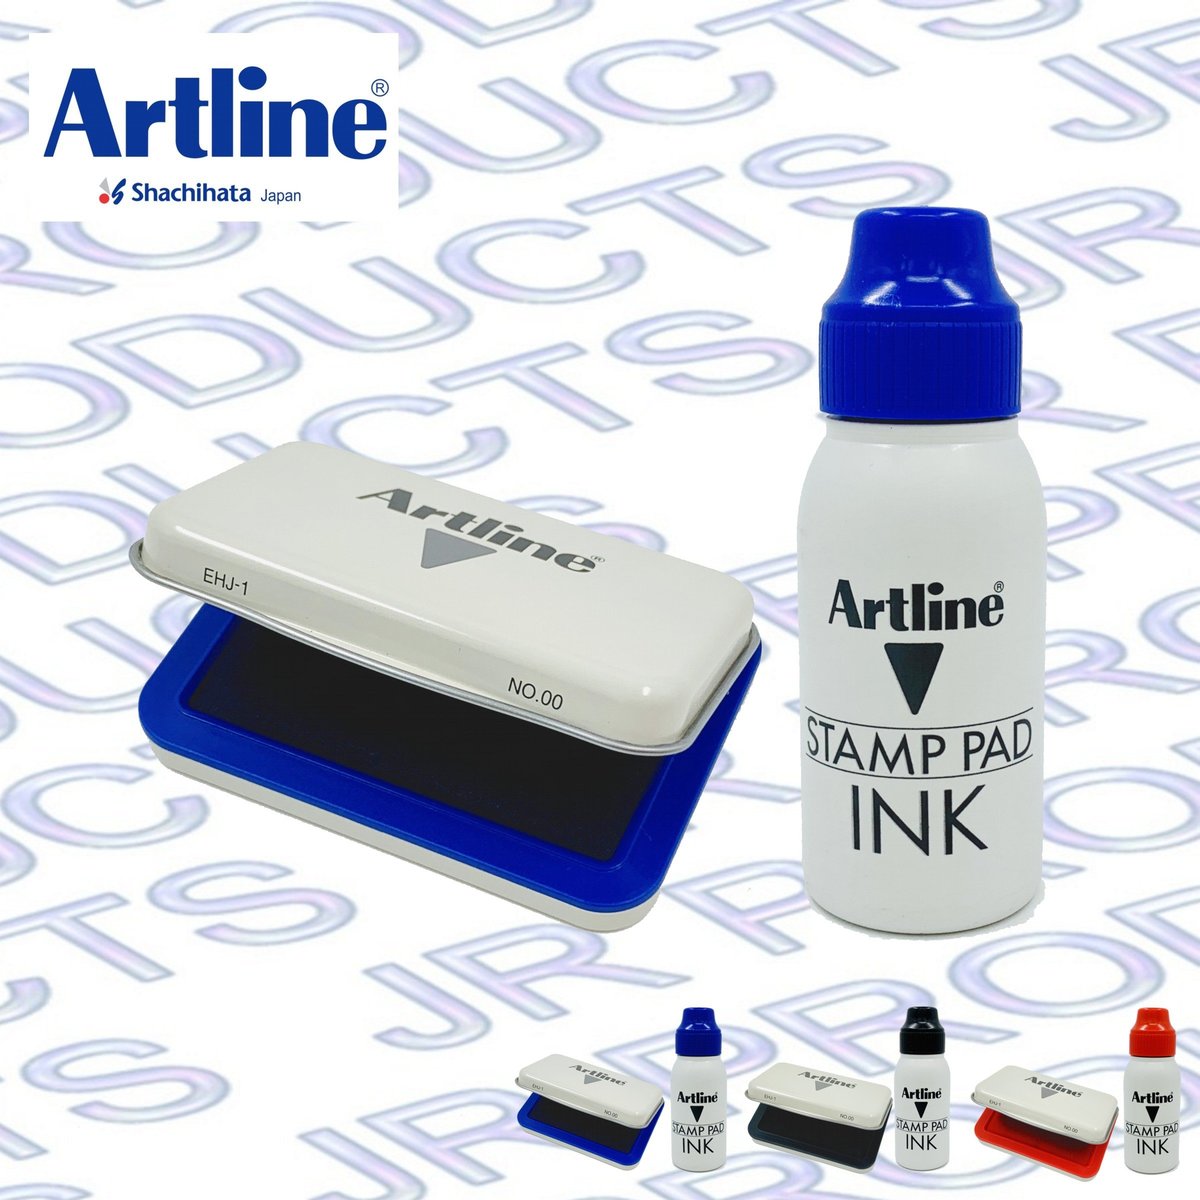 Artline Stamp Pad Ink